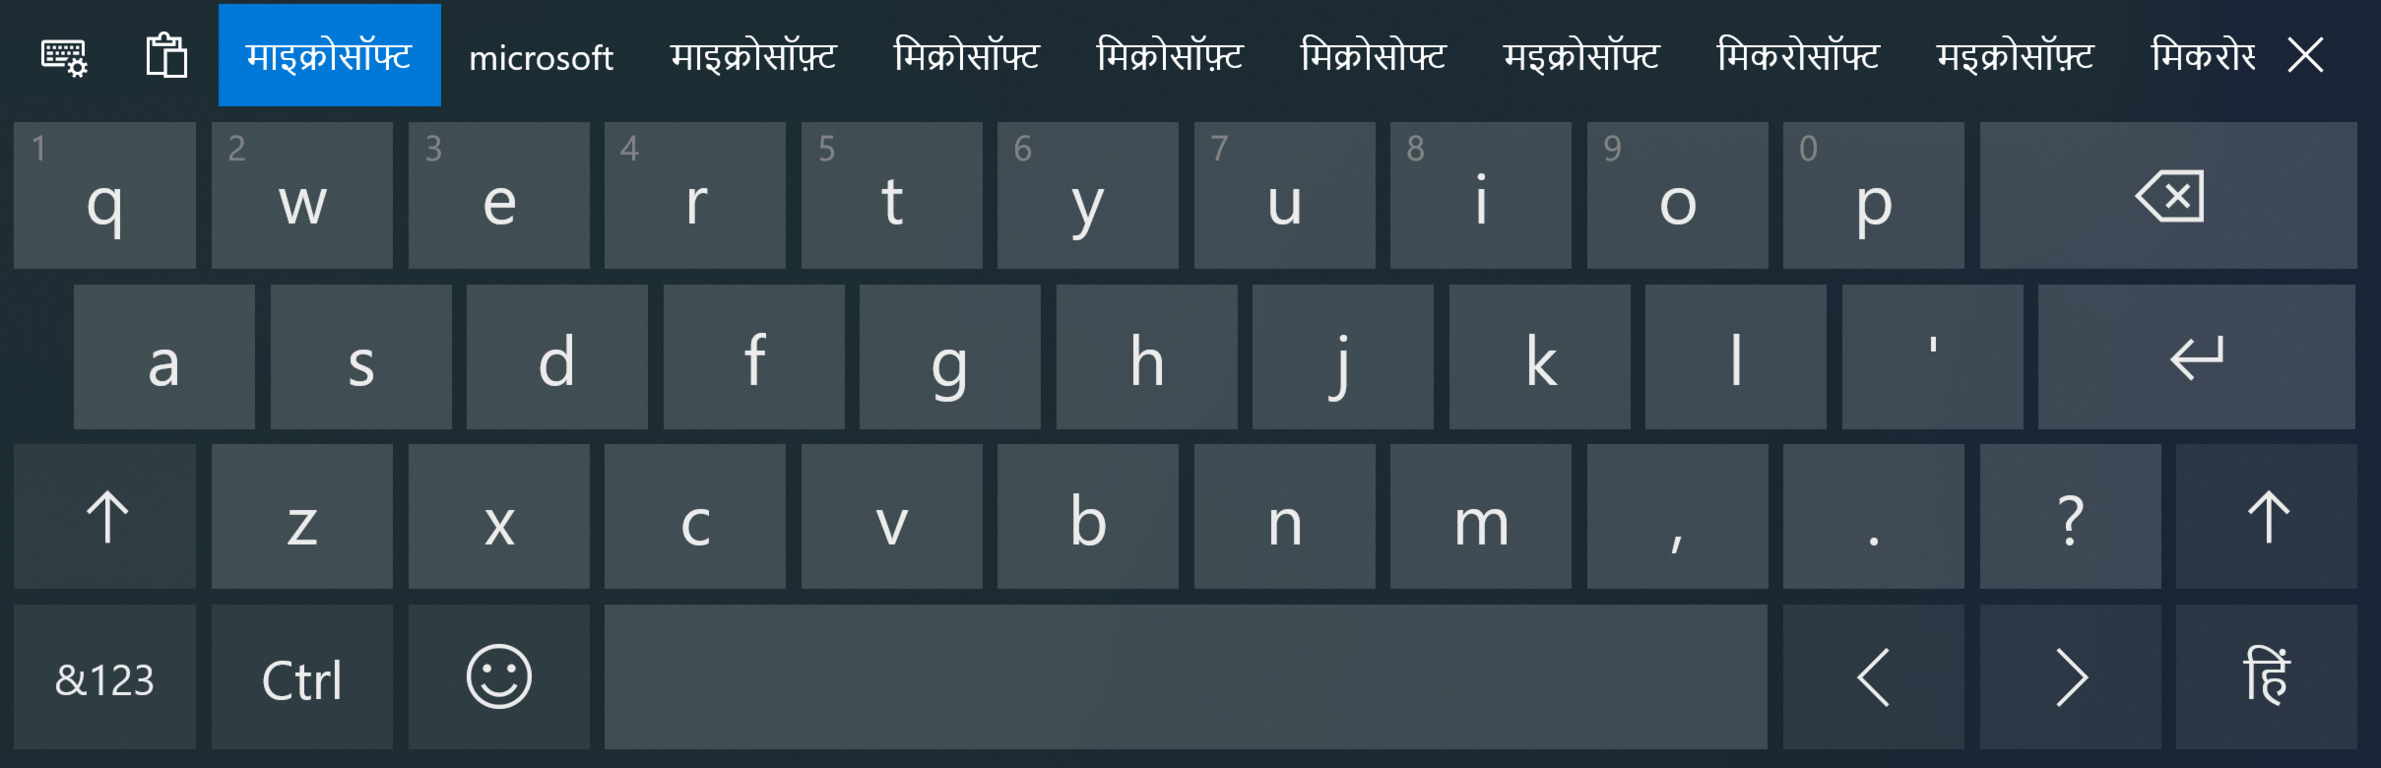 malayalam phonetic keyboard windows 10